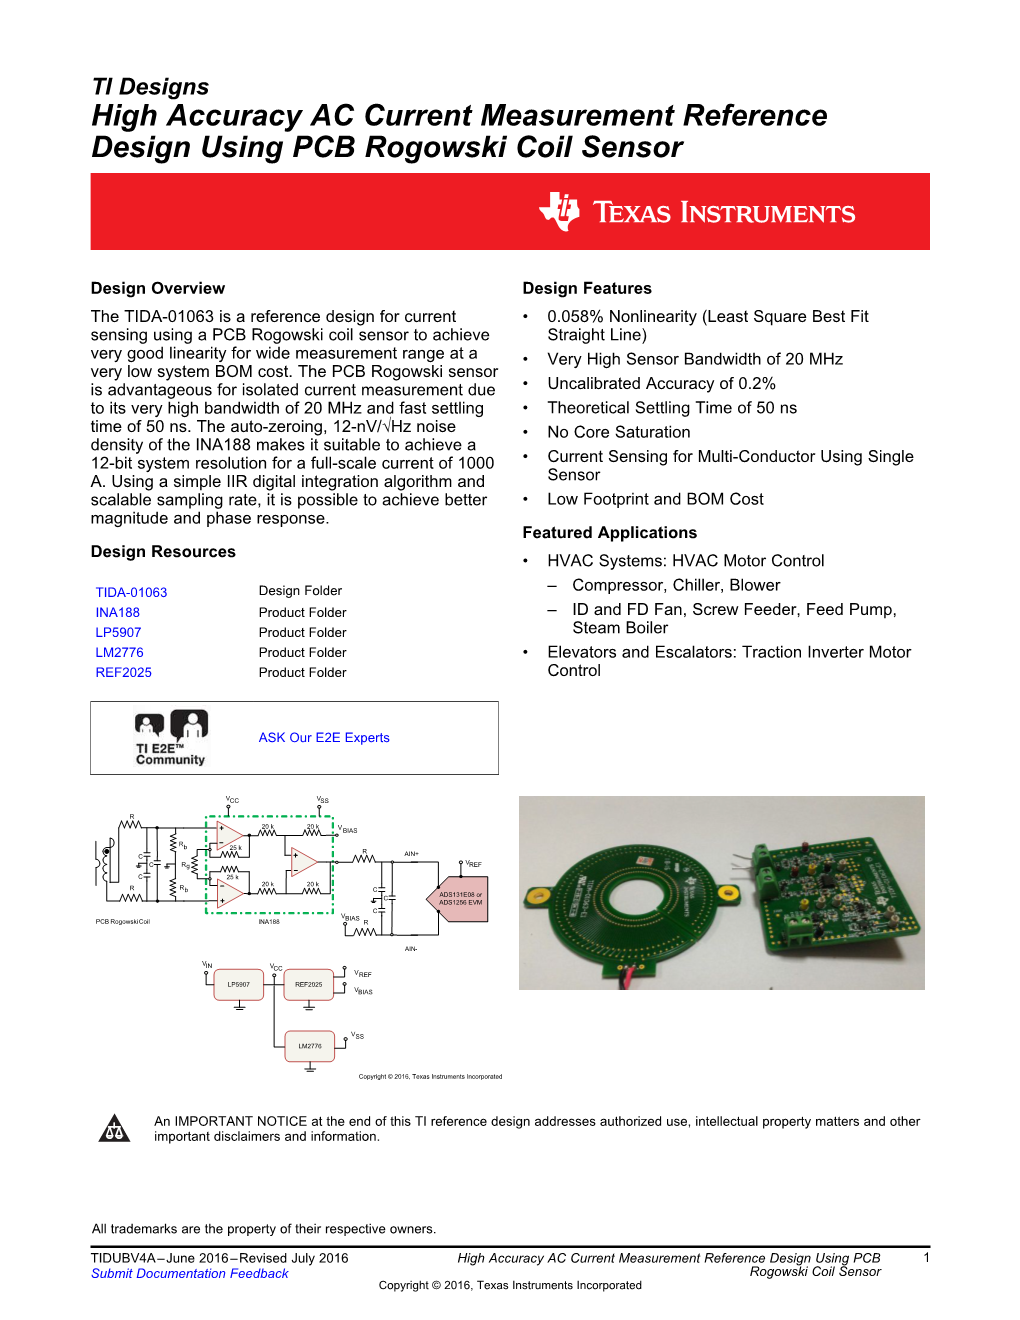 TI Designs High Accuracy AC Current Measurement Reference Design Using PCB Rogowski Coil Sensor